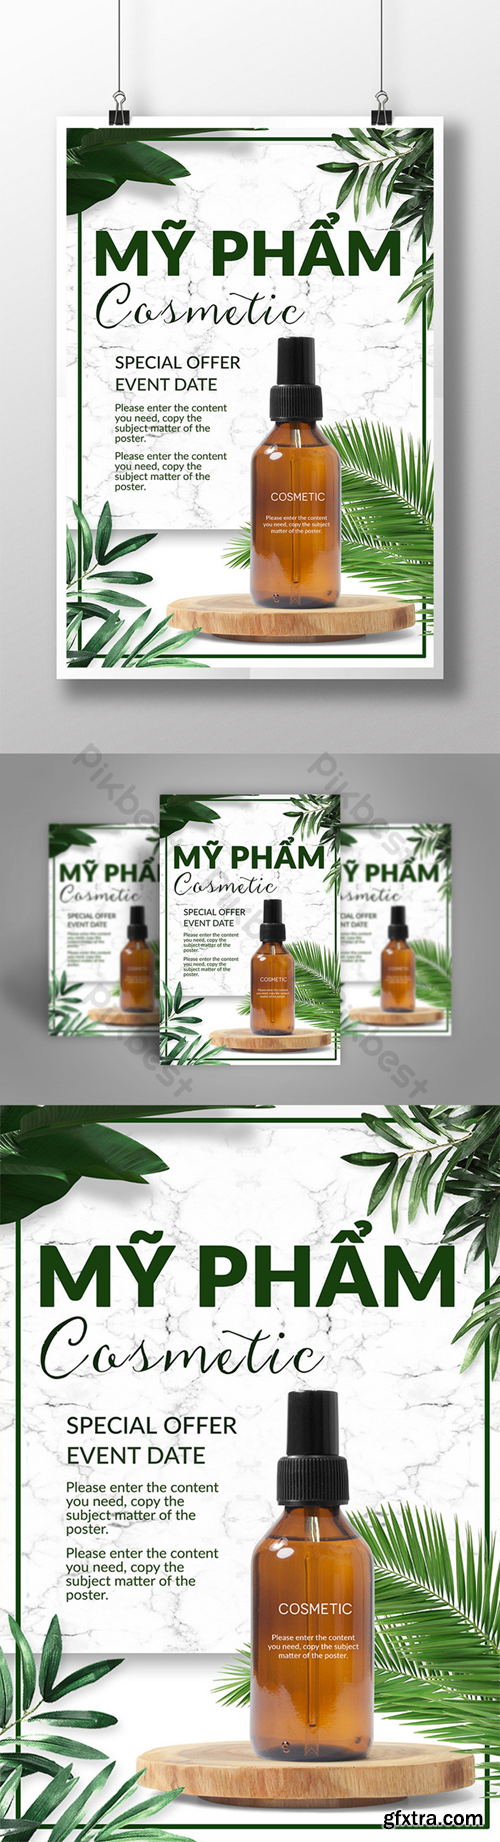 Vietnamese Cosmetics Fresh Real Plant Wood Bottom Skin Care Elegant Poster Template PSD